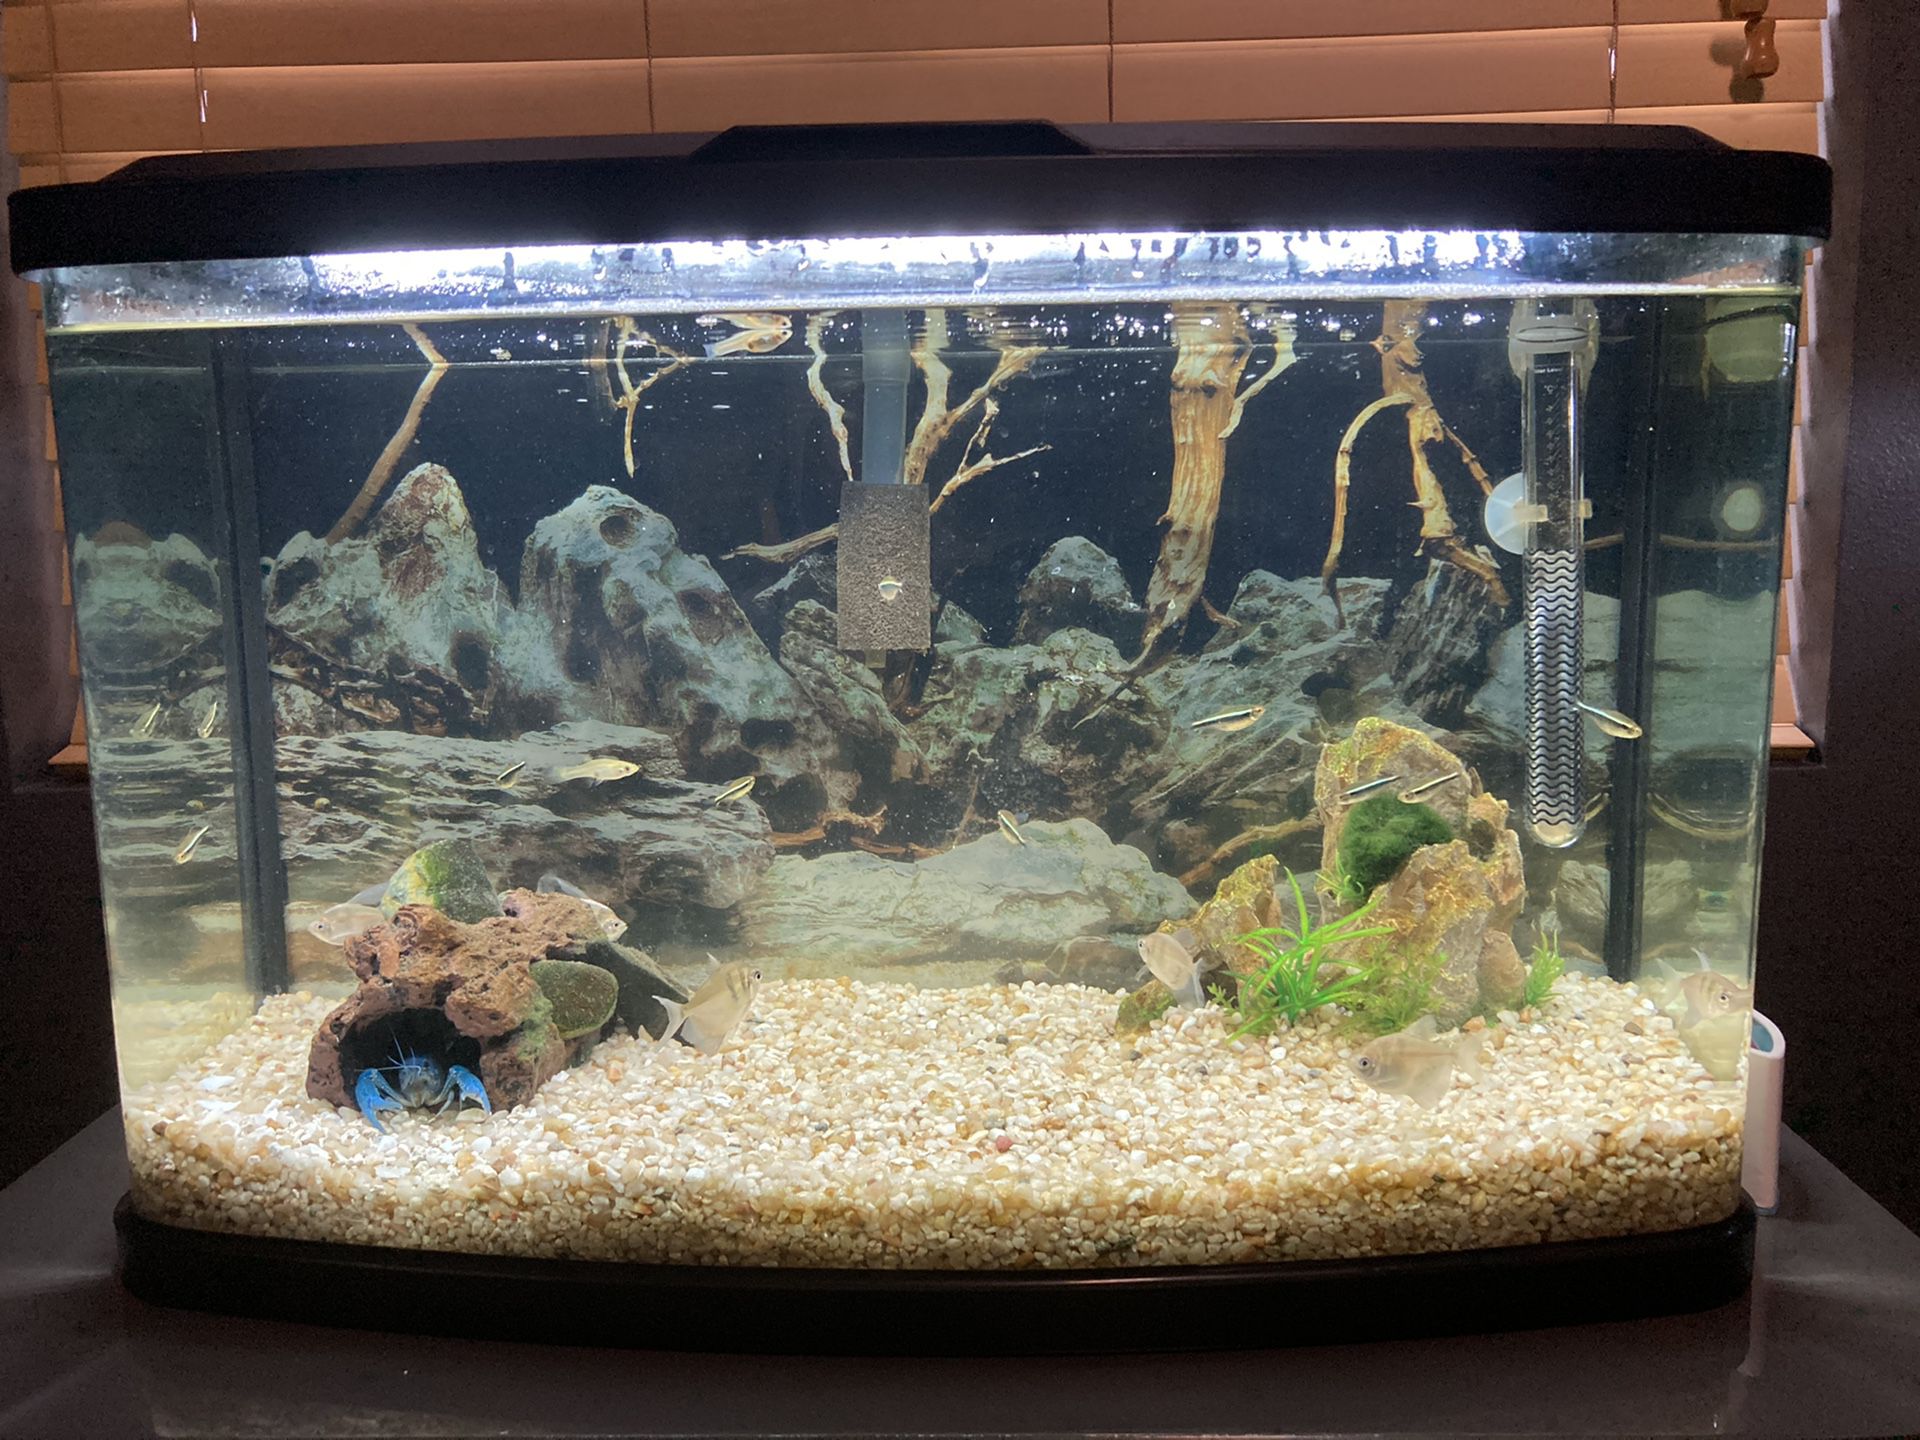 Fluval vista 16 gallon aquarium tank with decorations and fish